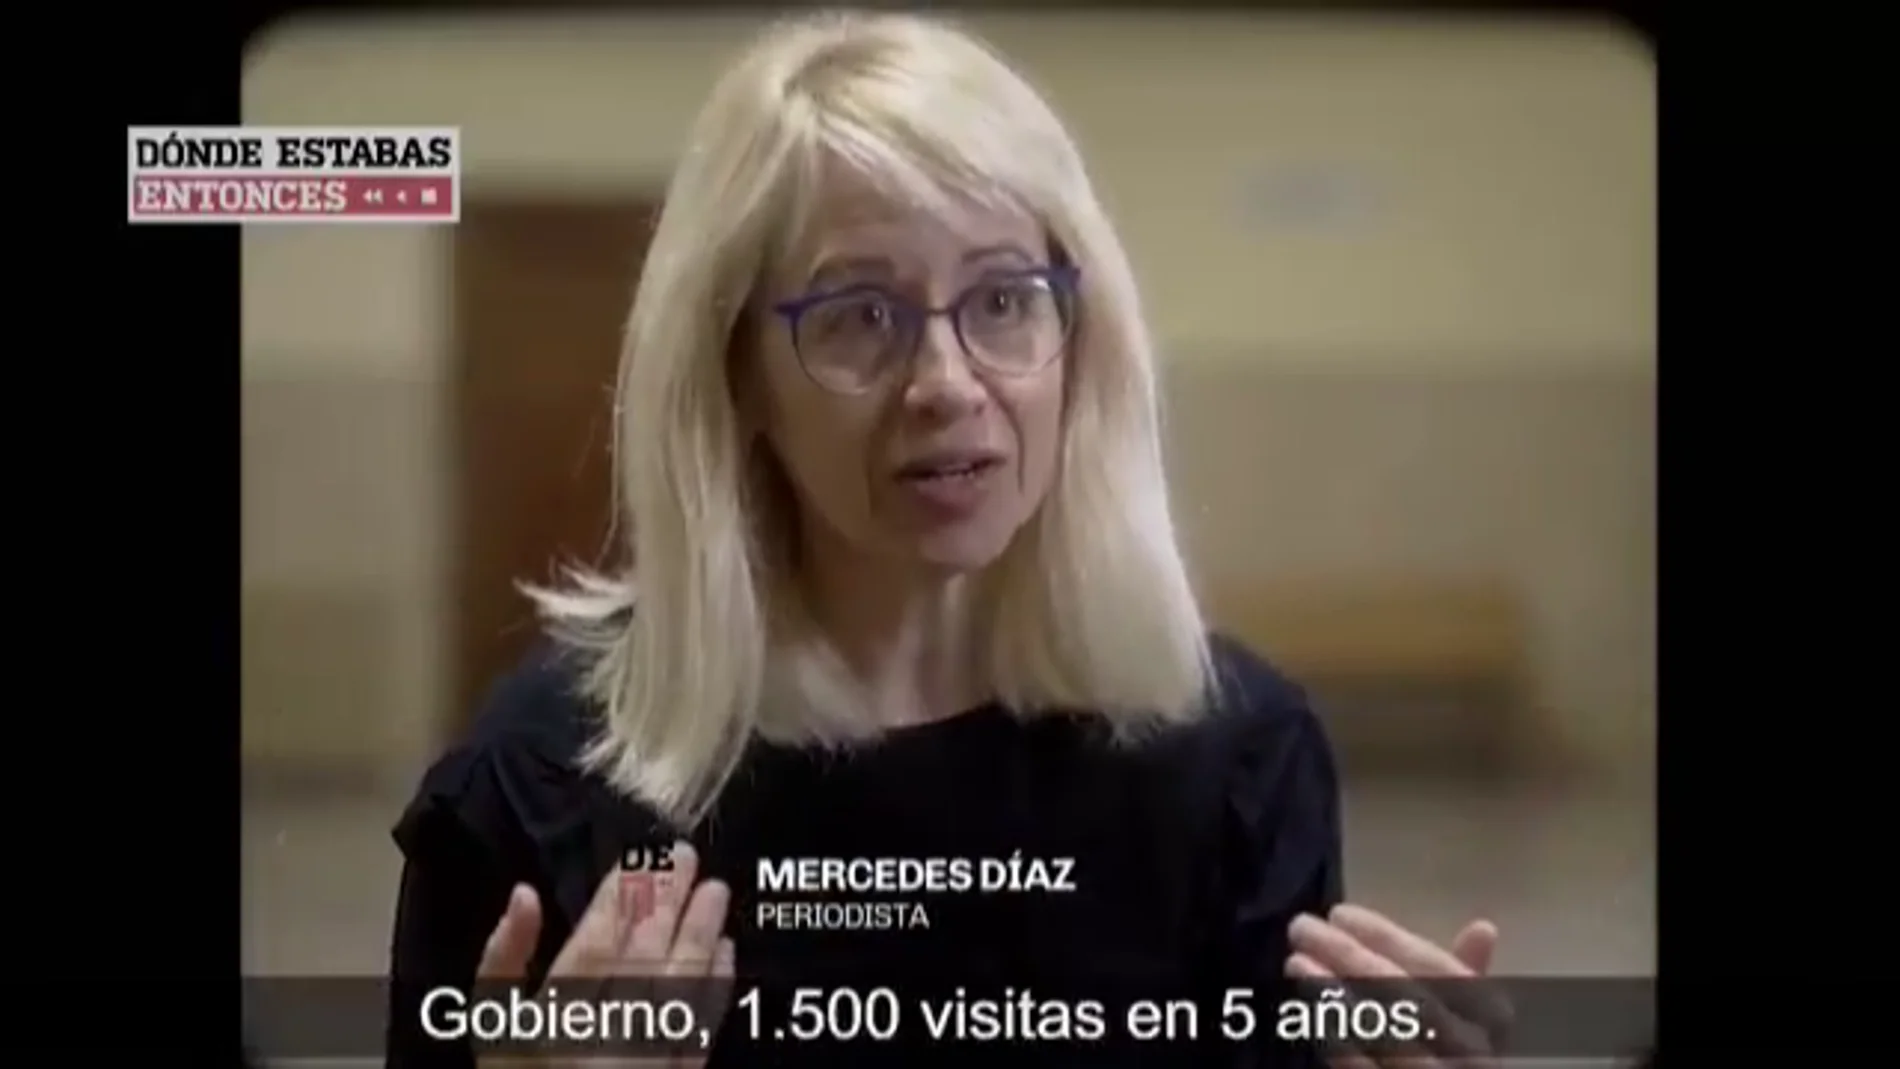 Mercedes Díaz, periodista, en Dónde estabas entonces